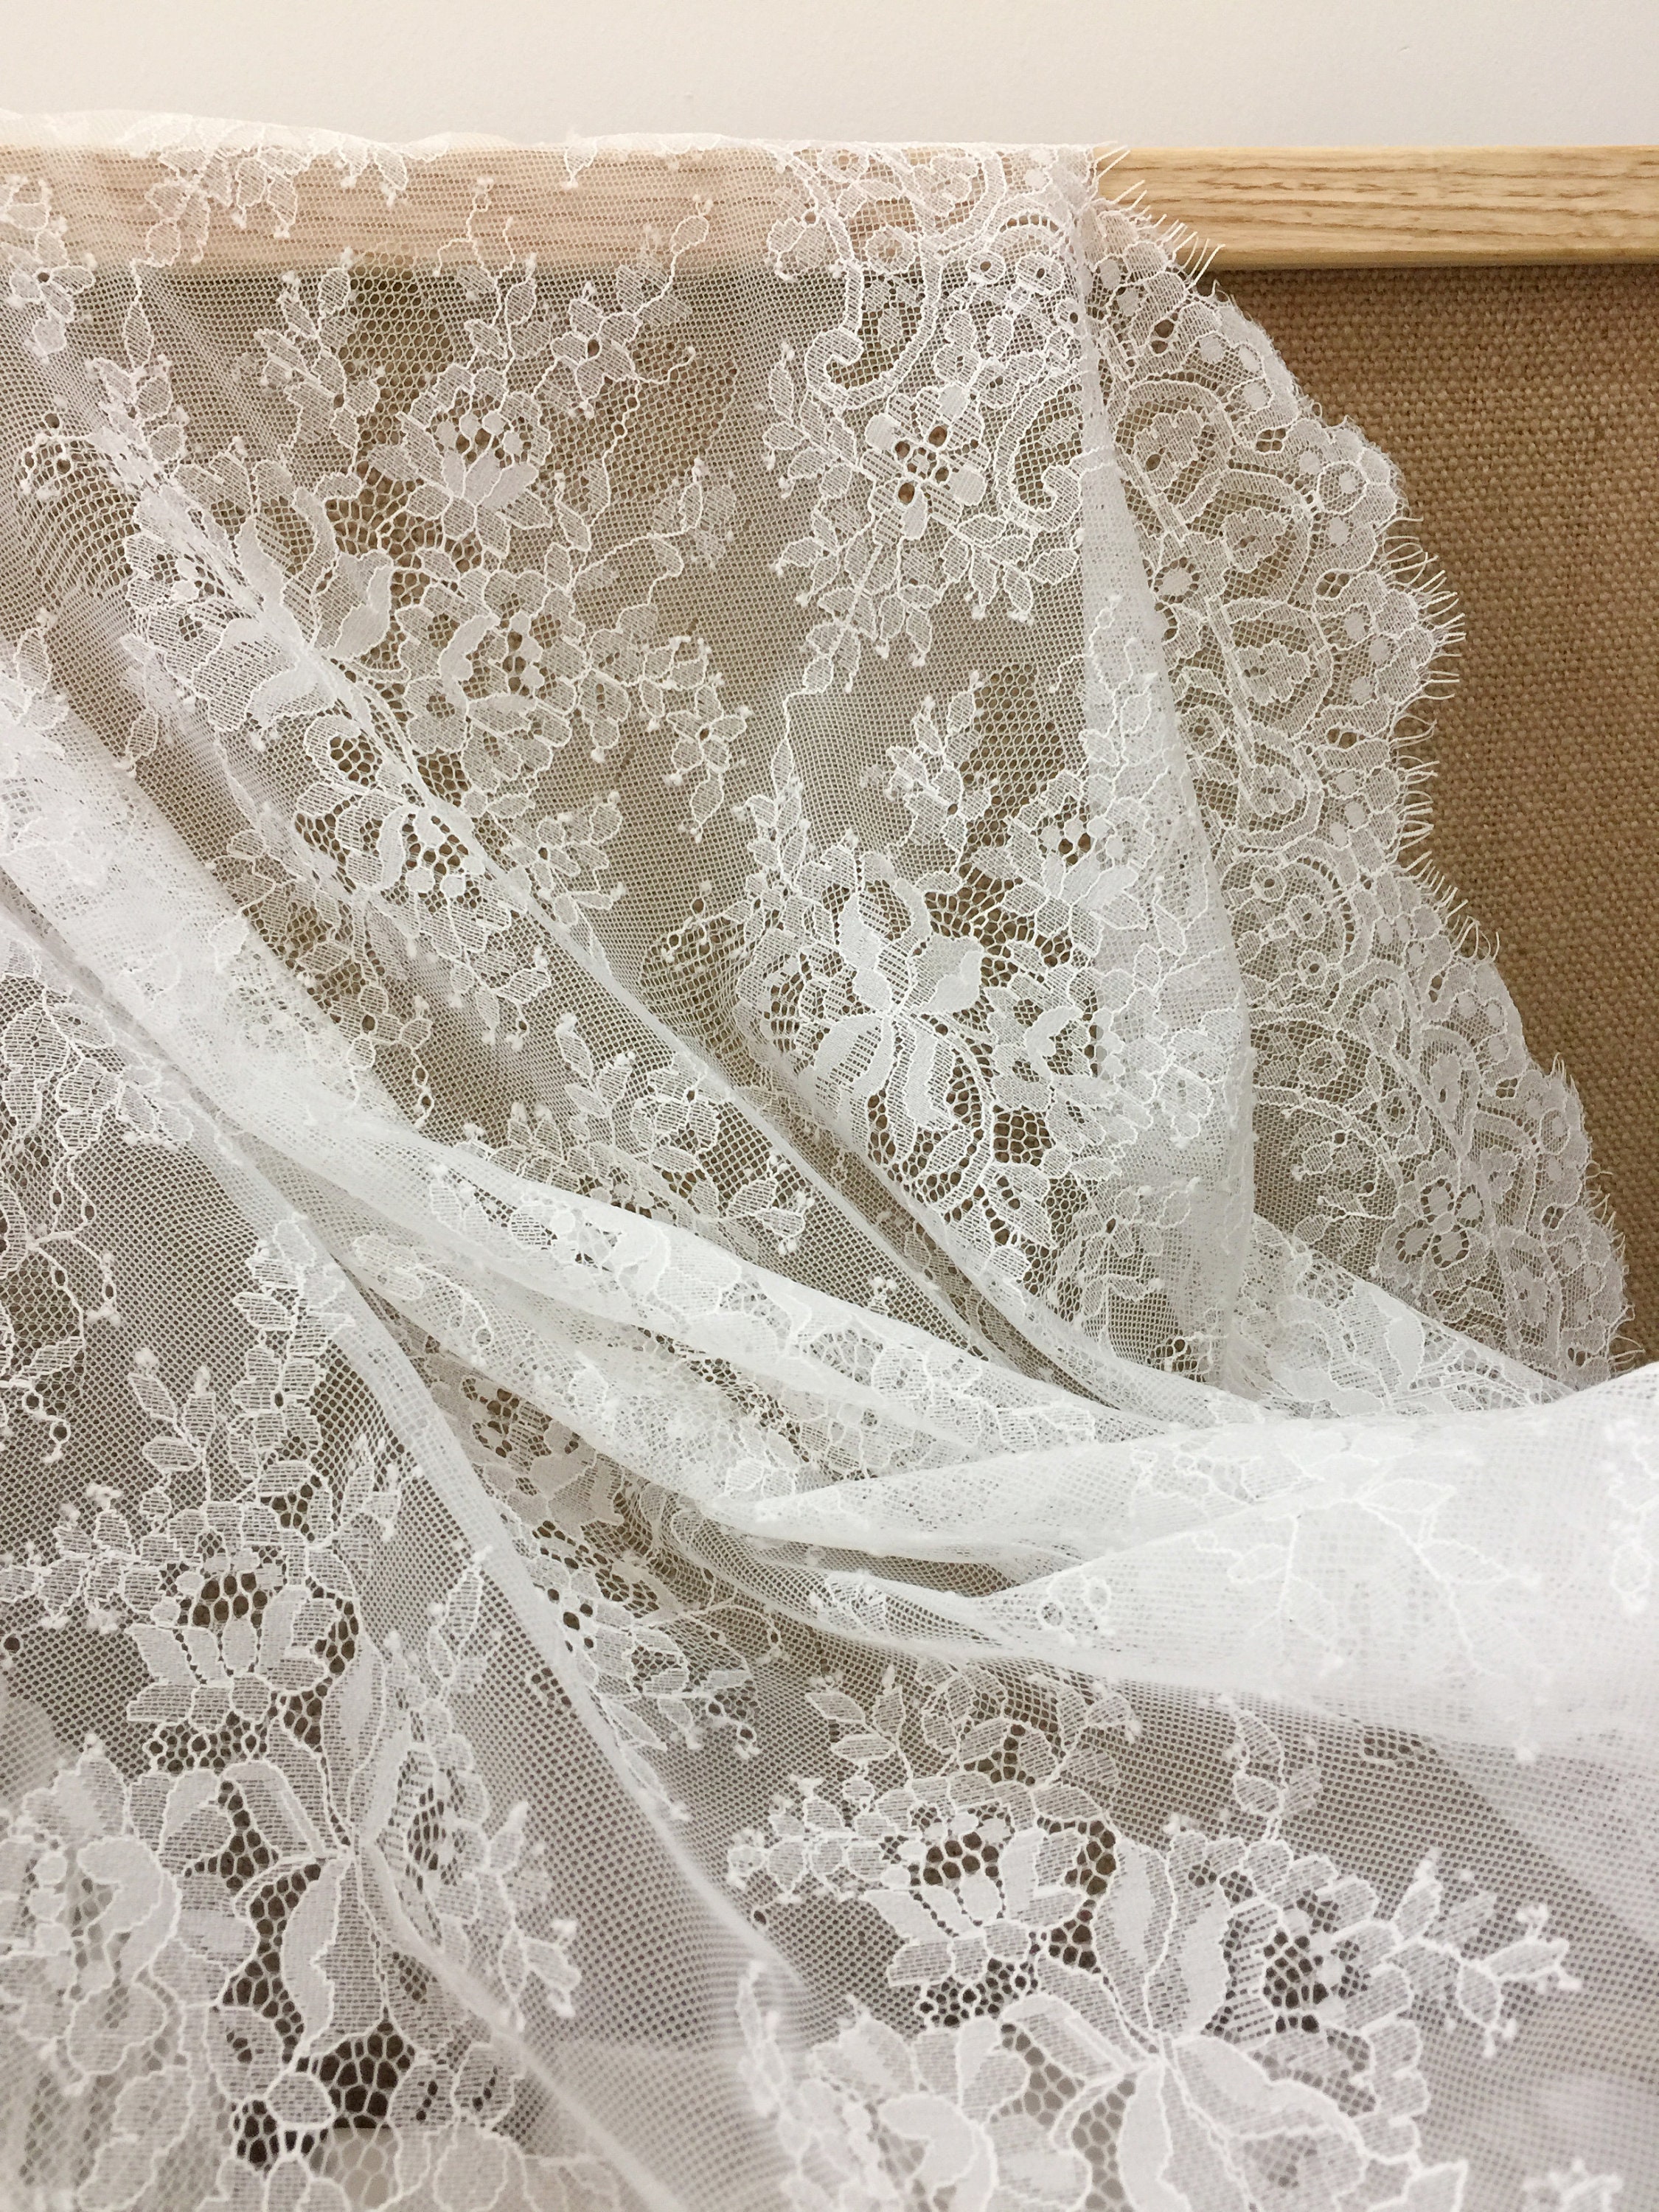 Off White Slim French Chantilly Lace Fabric elegant Sheer | Etsy